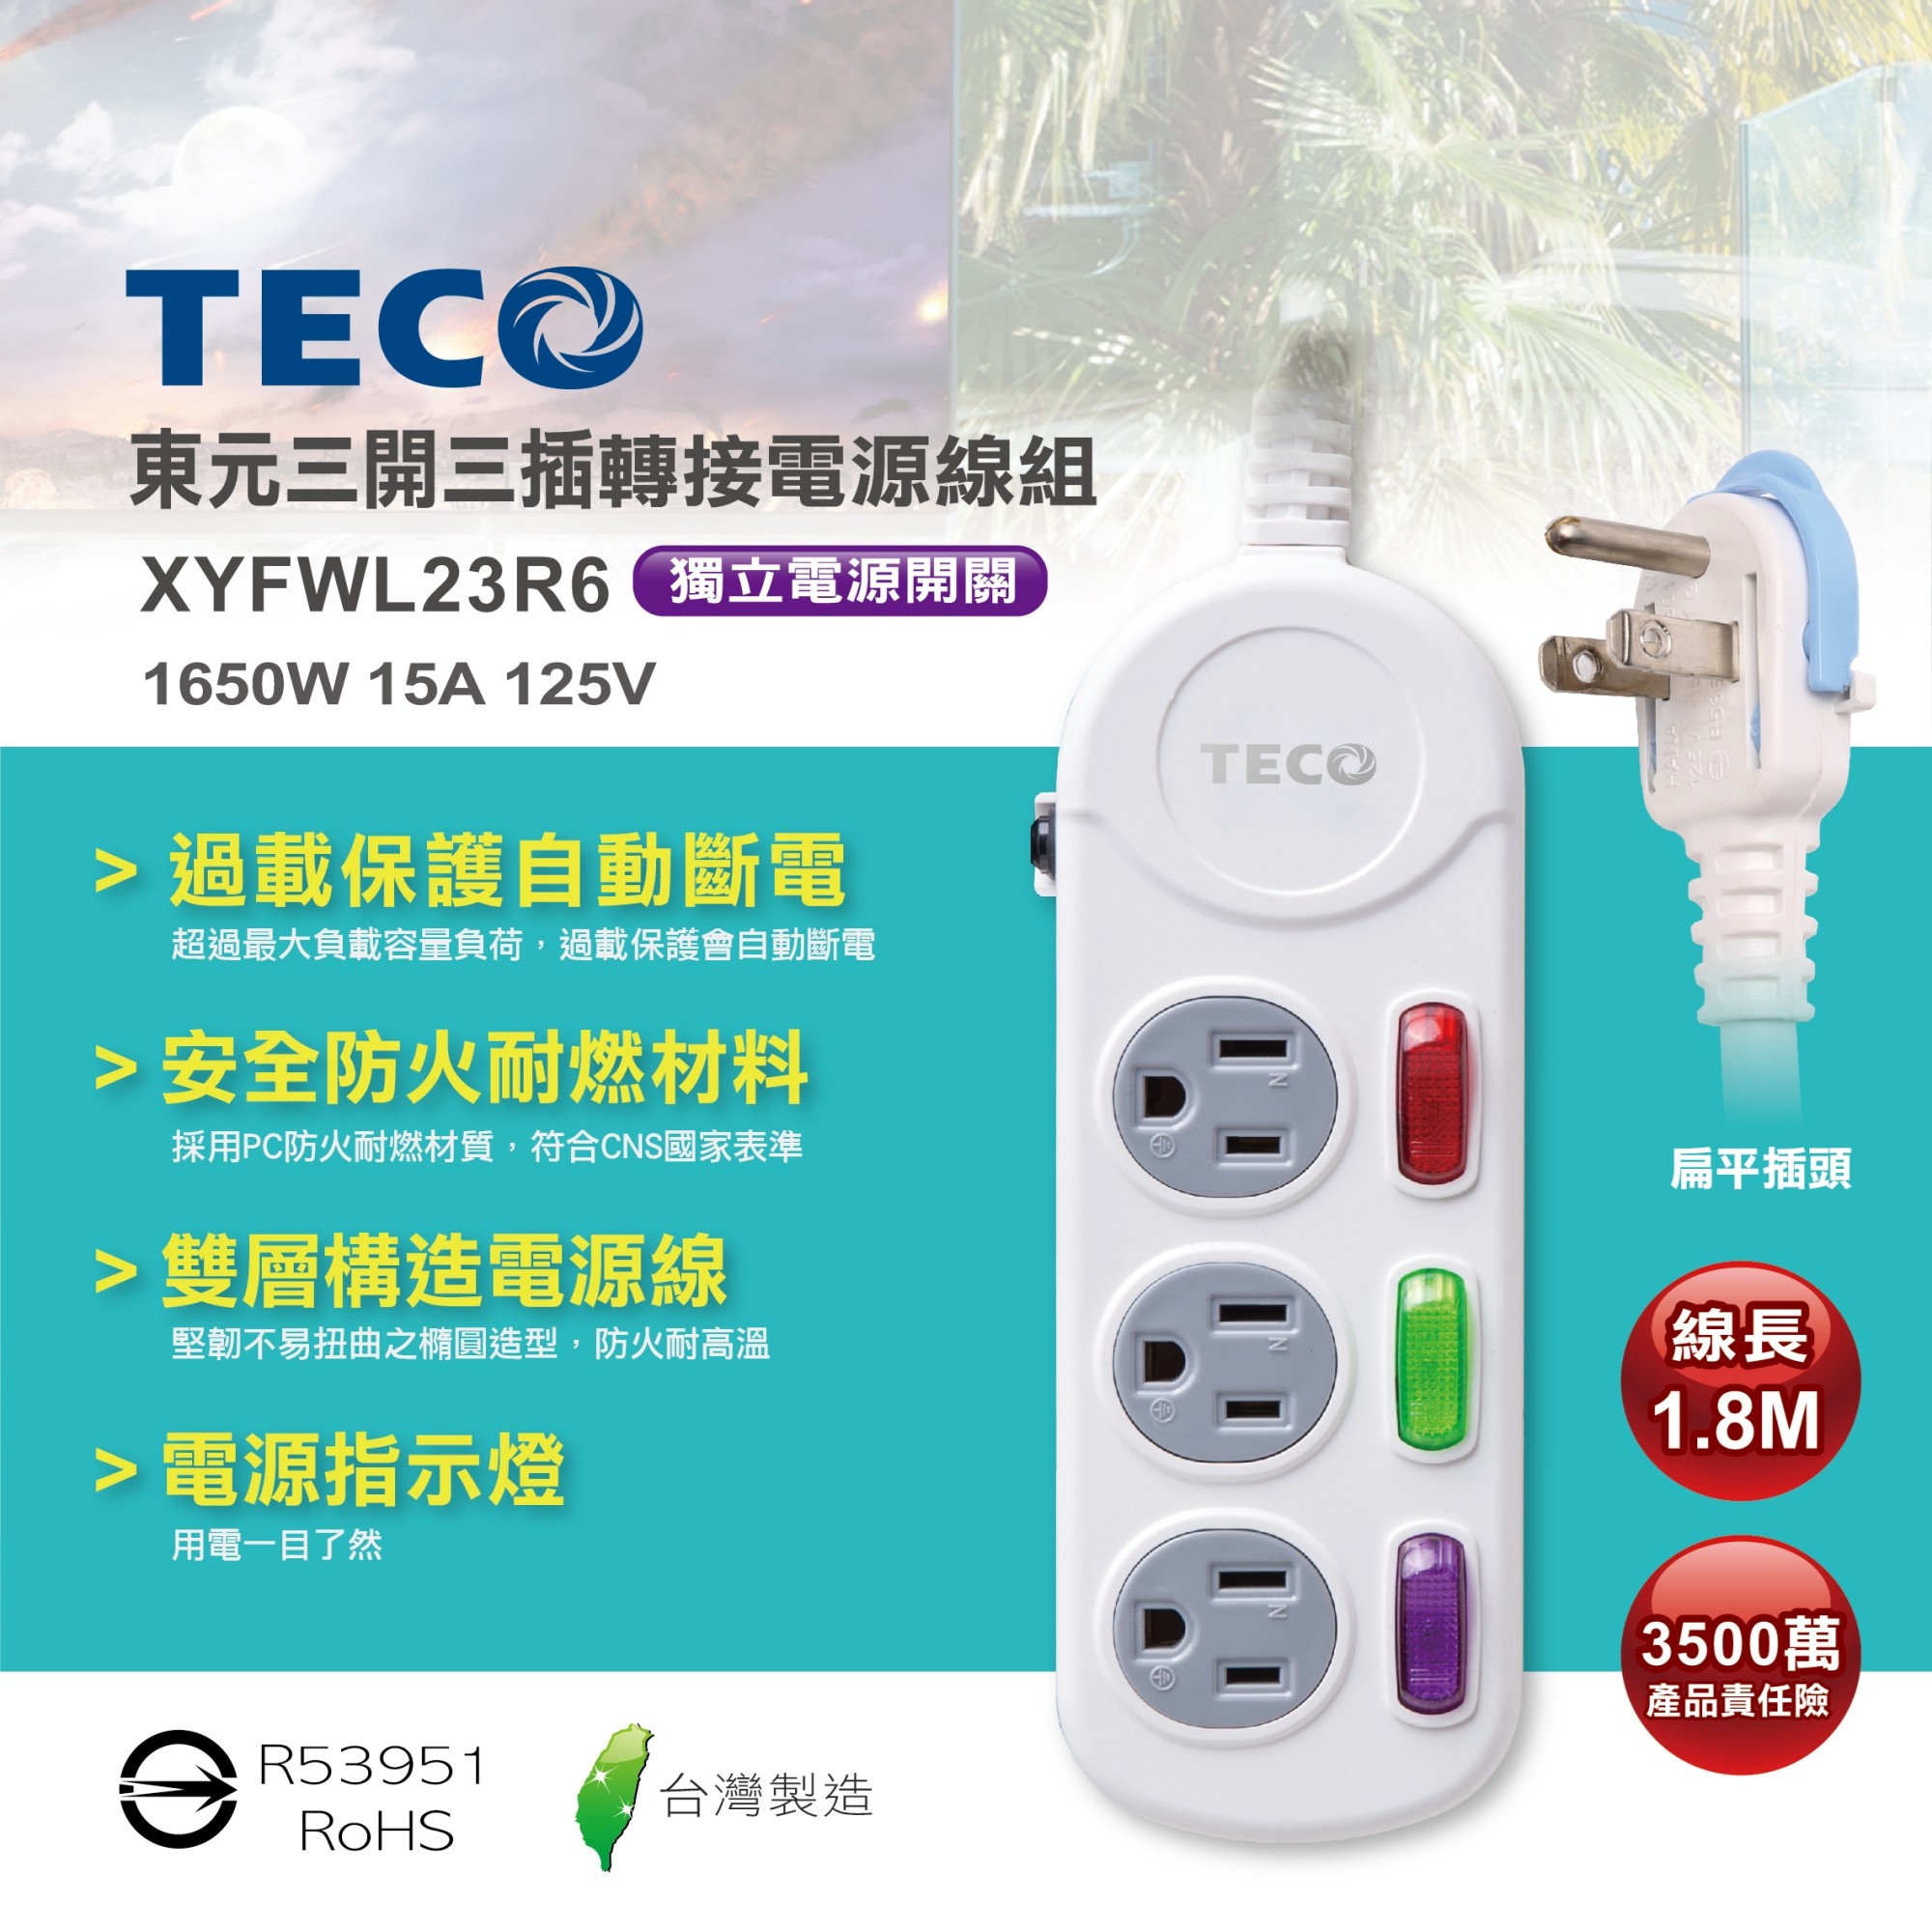 TECO東元 三開三插電源延長線(1.8M) XYFWL23R6